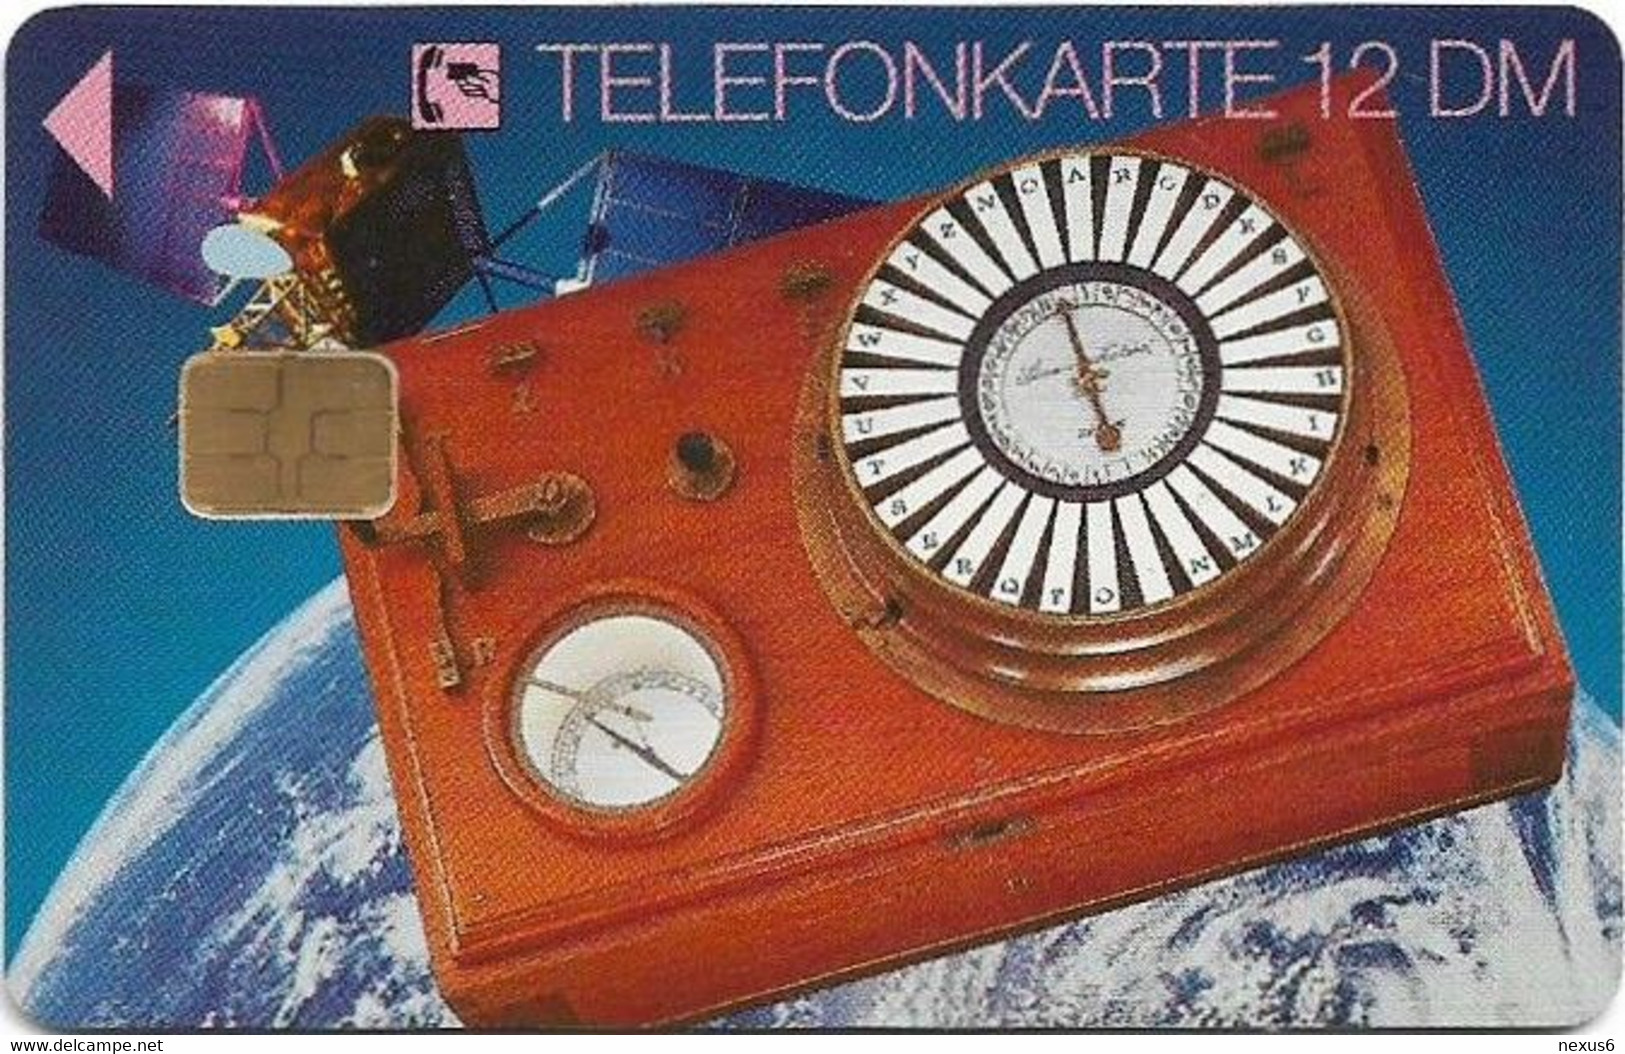 Germany - Alte Morseapparate 4 - Zeigertelegraf - E 16/09.94 - 12DM, 30.000ex, Mint - E-Series : Edition - D. Postreklame